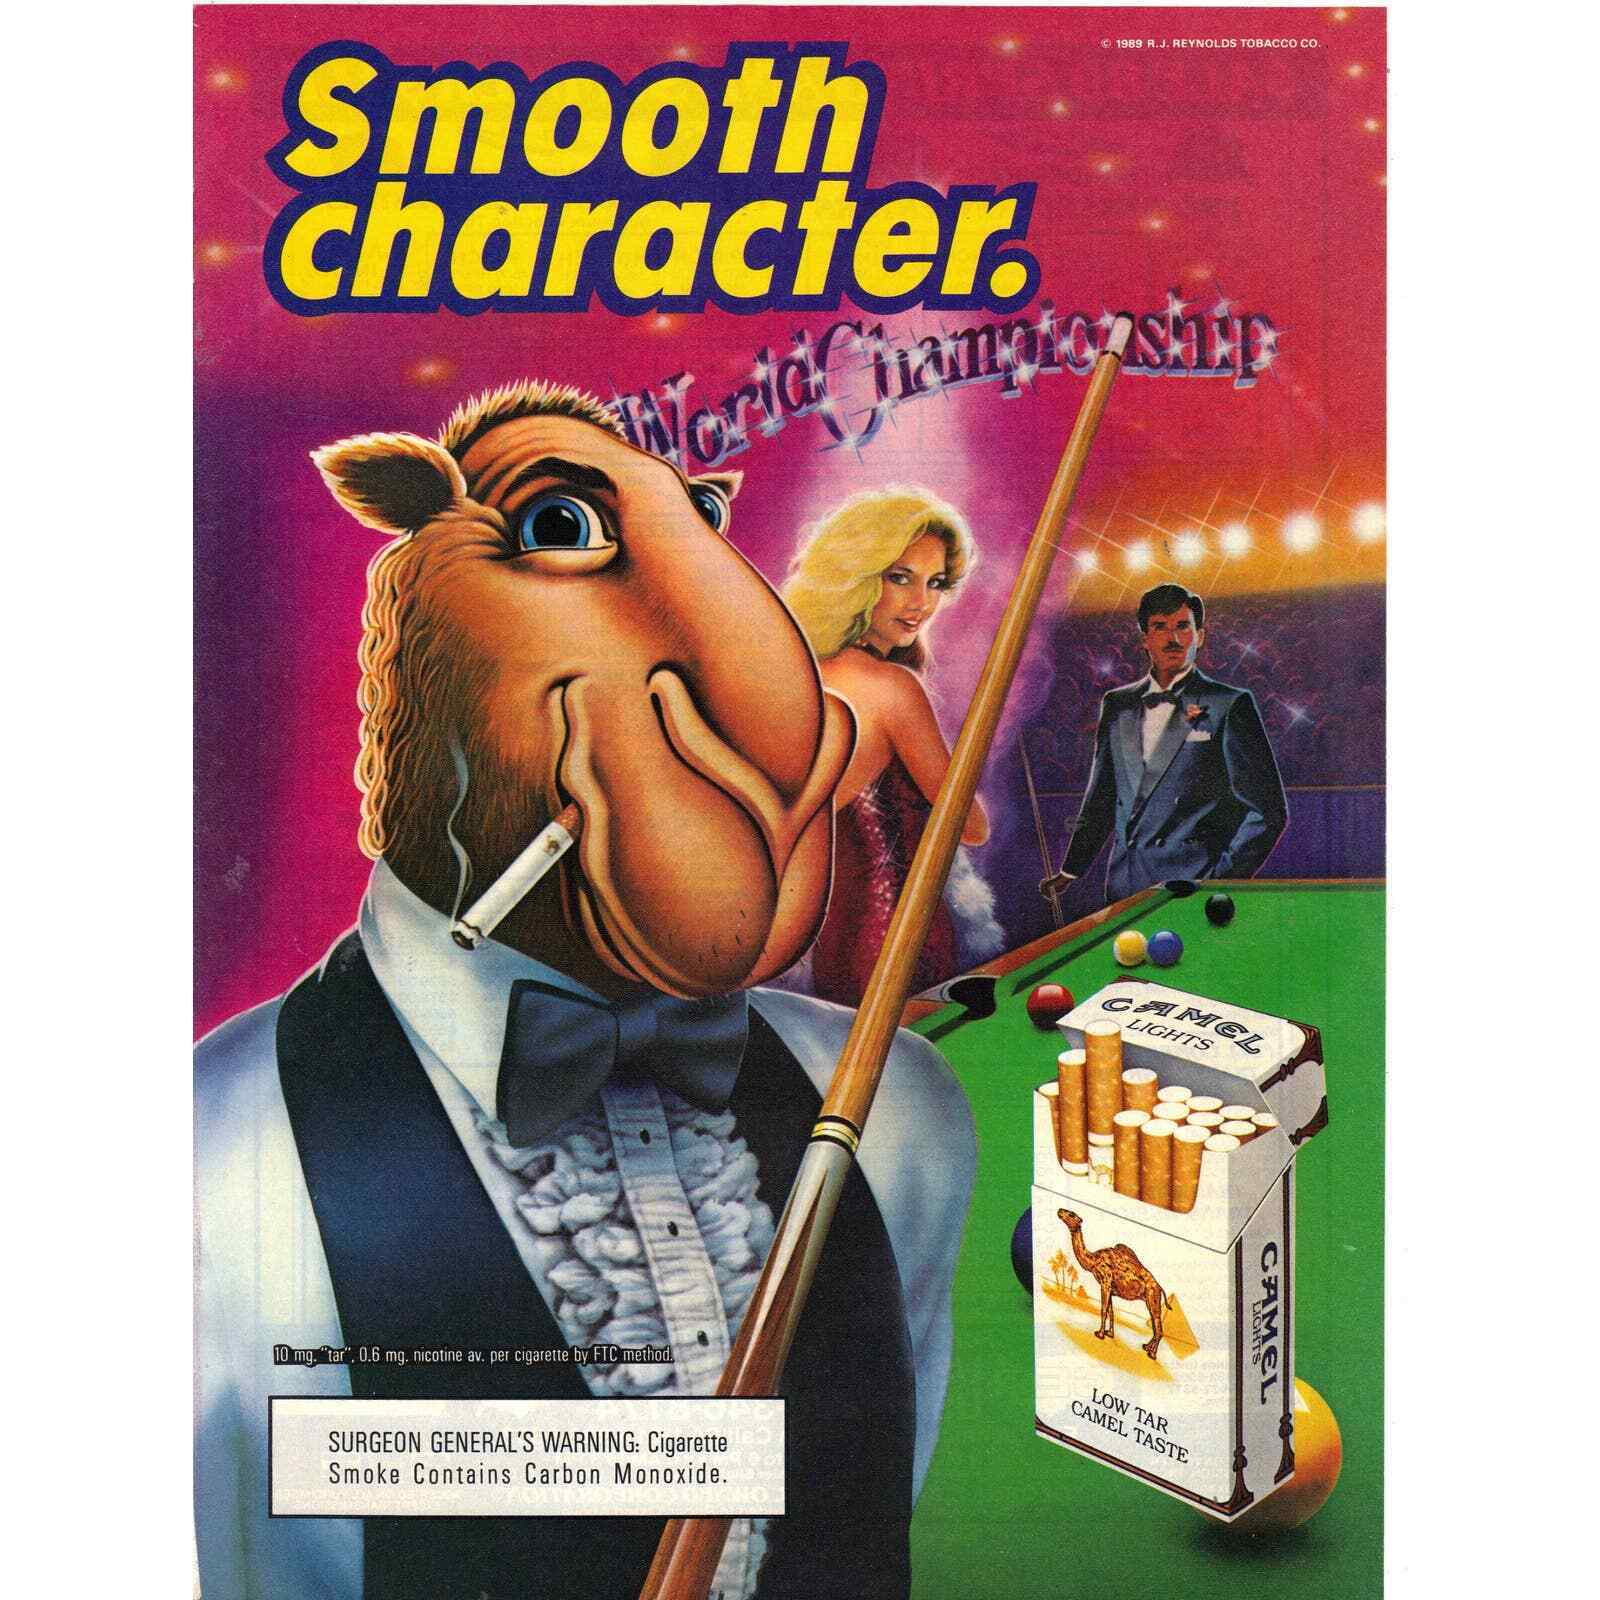 Vintage 1989 Print Ad for Camel Cigarettes with Joe Camel